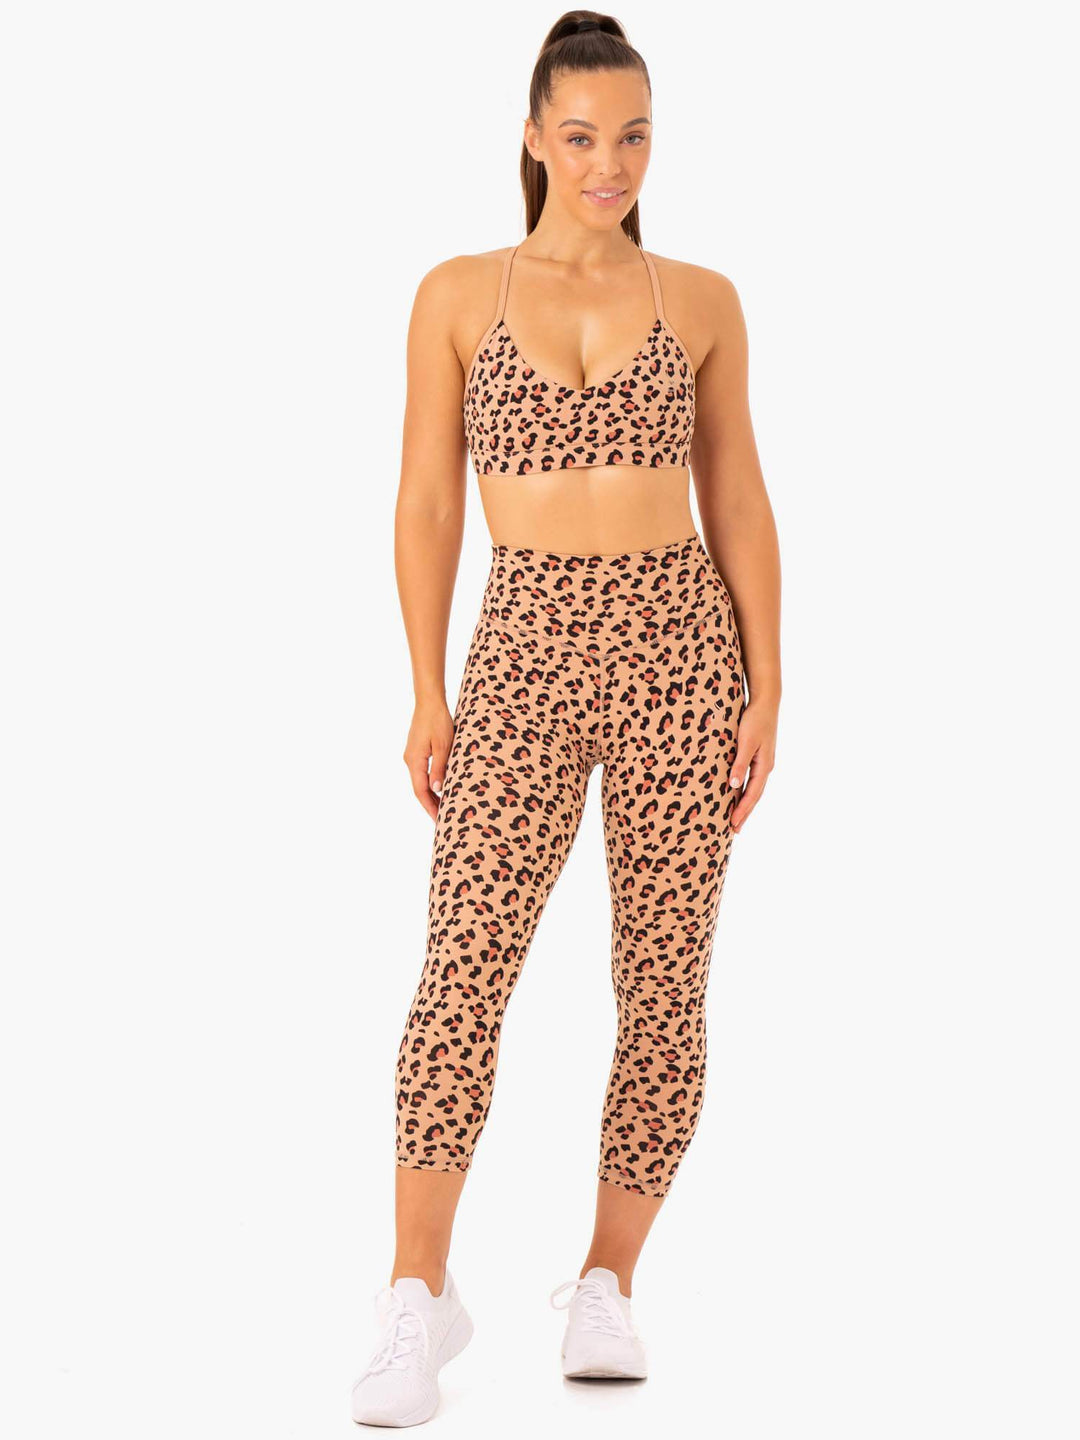 Hybrid 7/8 Leggings - Tan Leopard Clothing Ryderwear 